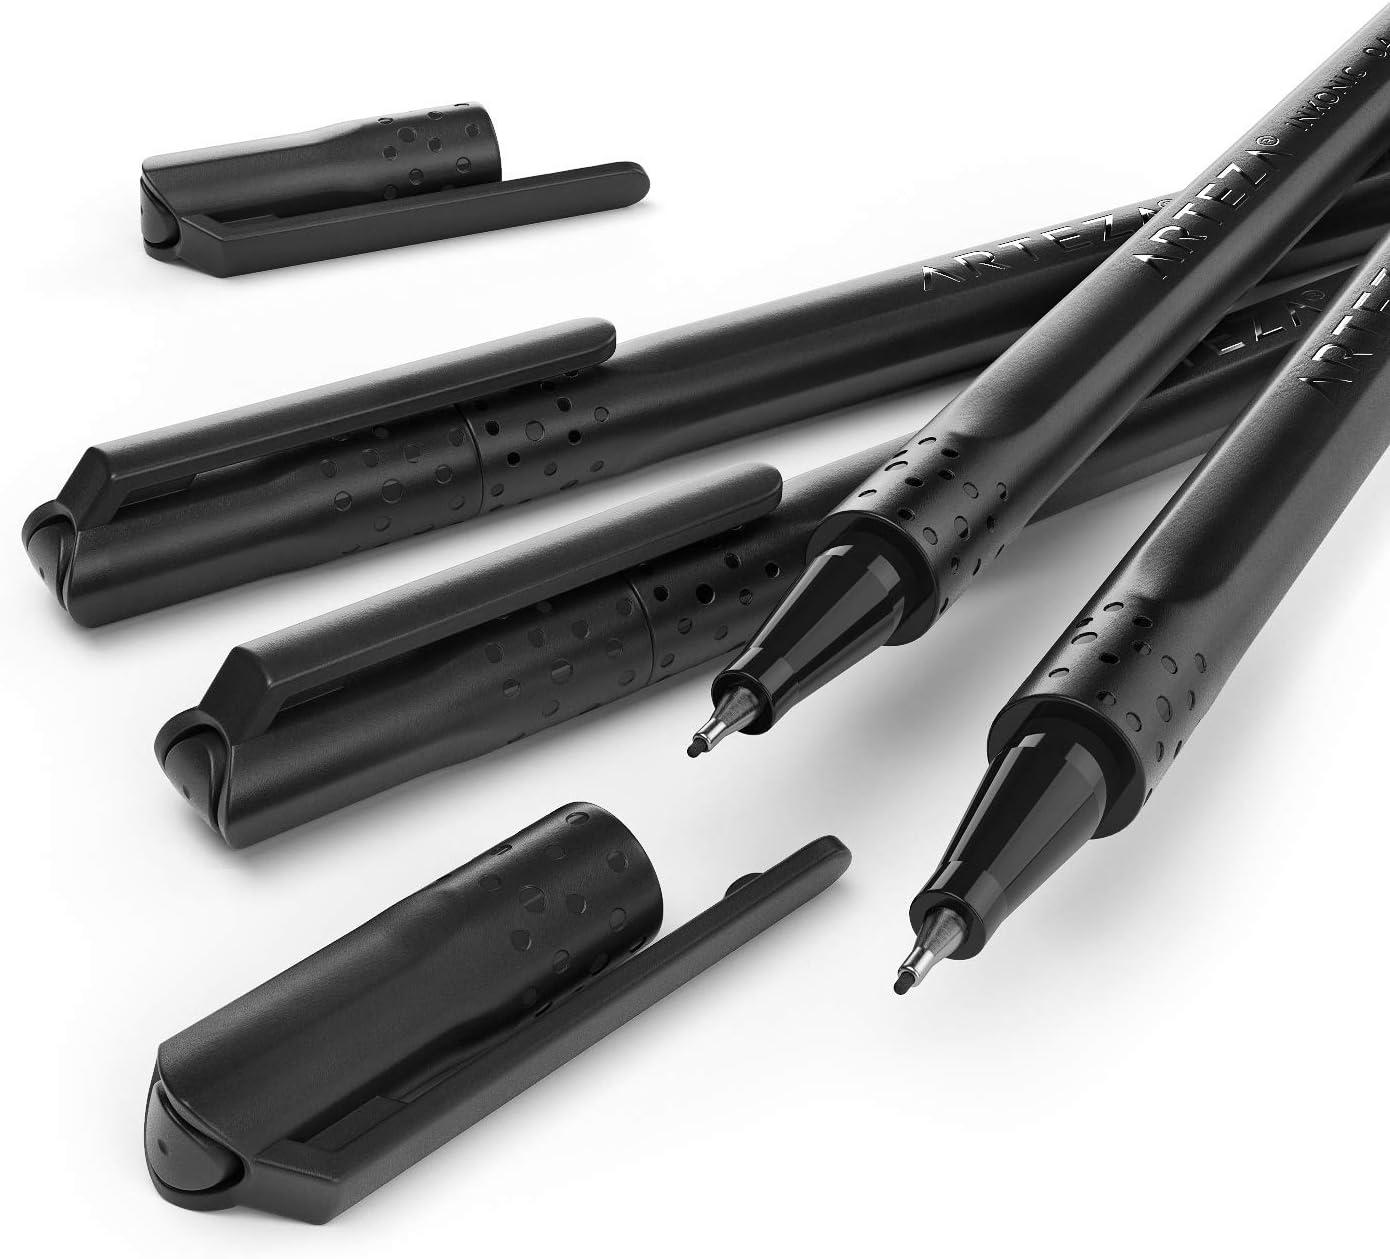 Arteza Inkonic Fineliner Pens - Set of 72